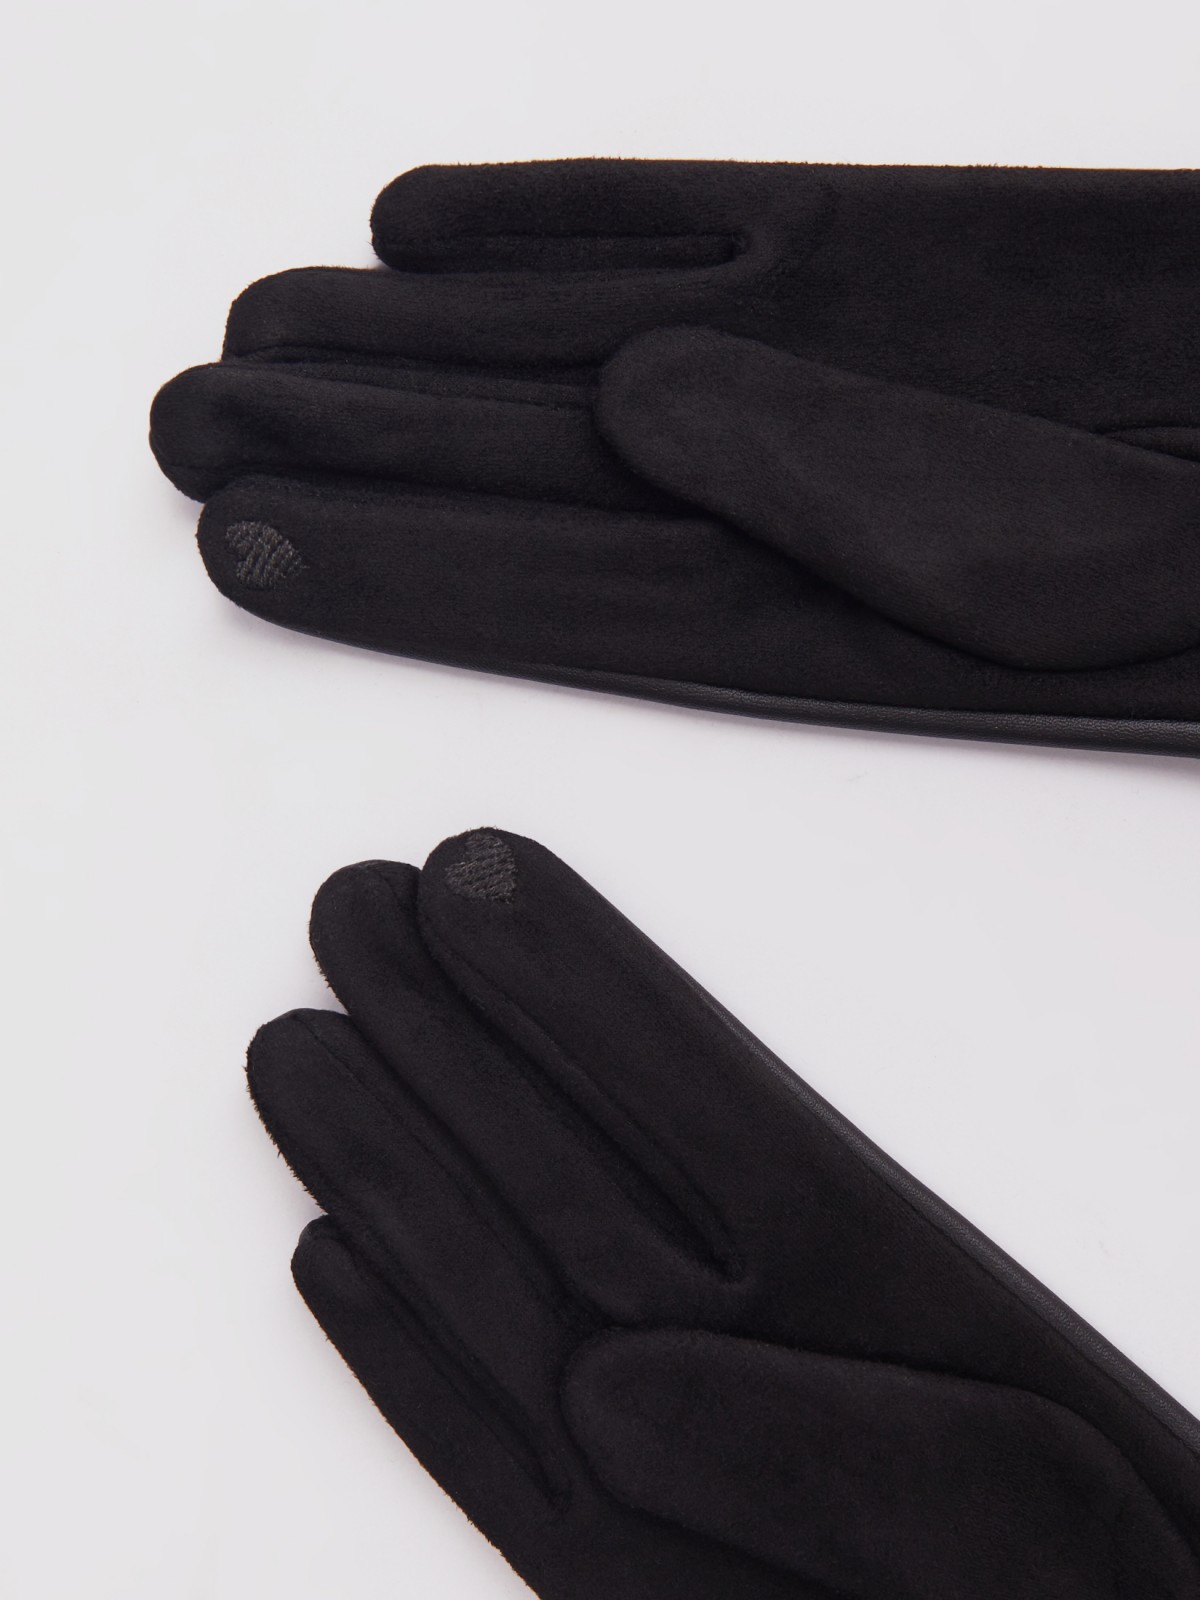 Утеплённые перчатки с функцией Touch Screen